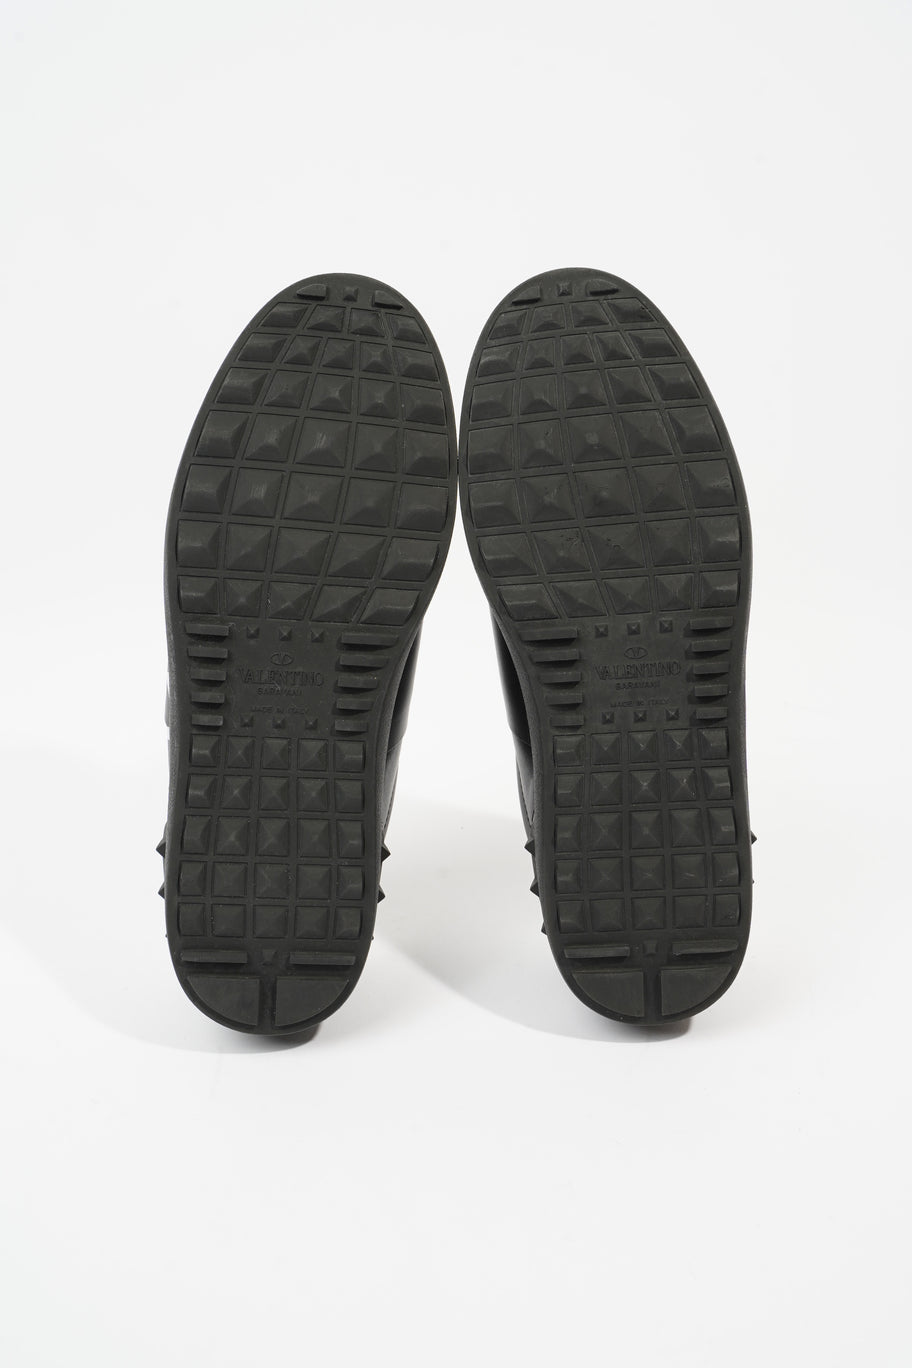 Open VLTN Sneaker Black / White Tab Leather EU 40 UK 6 Image 7